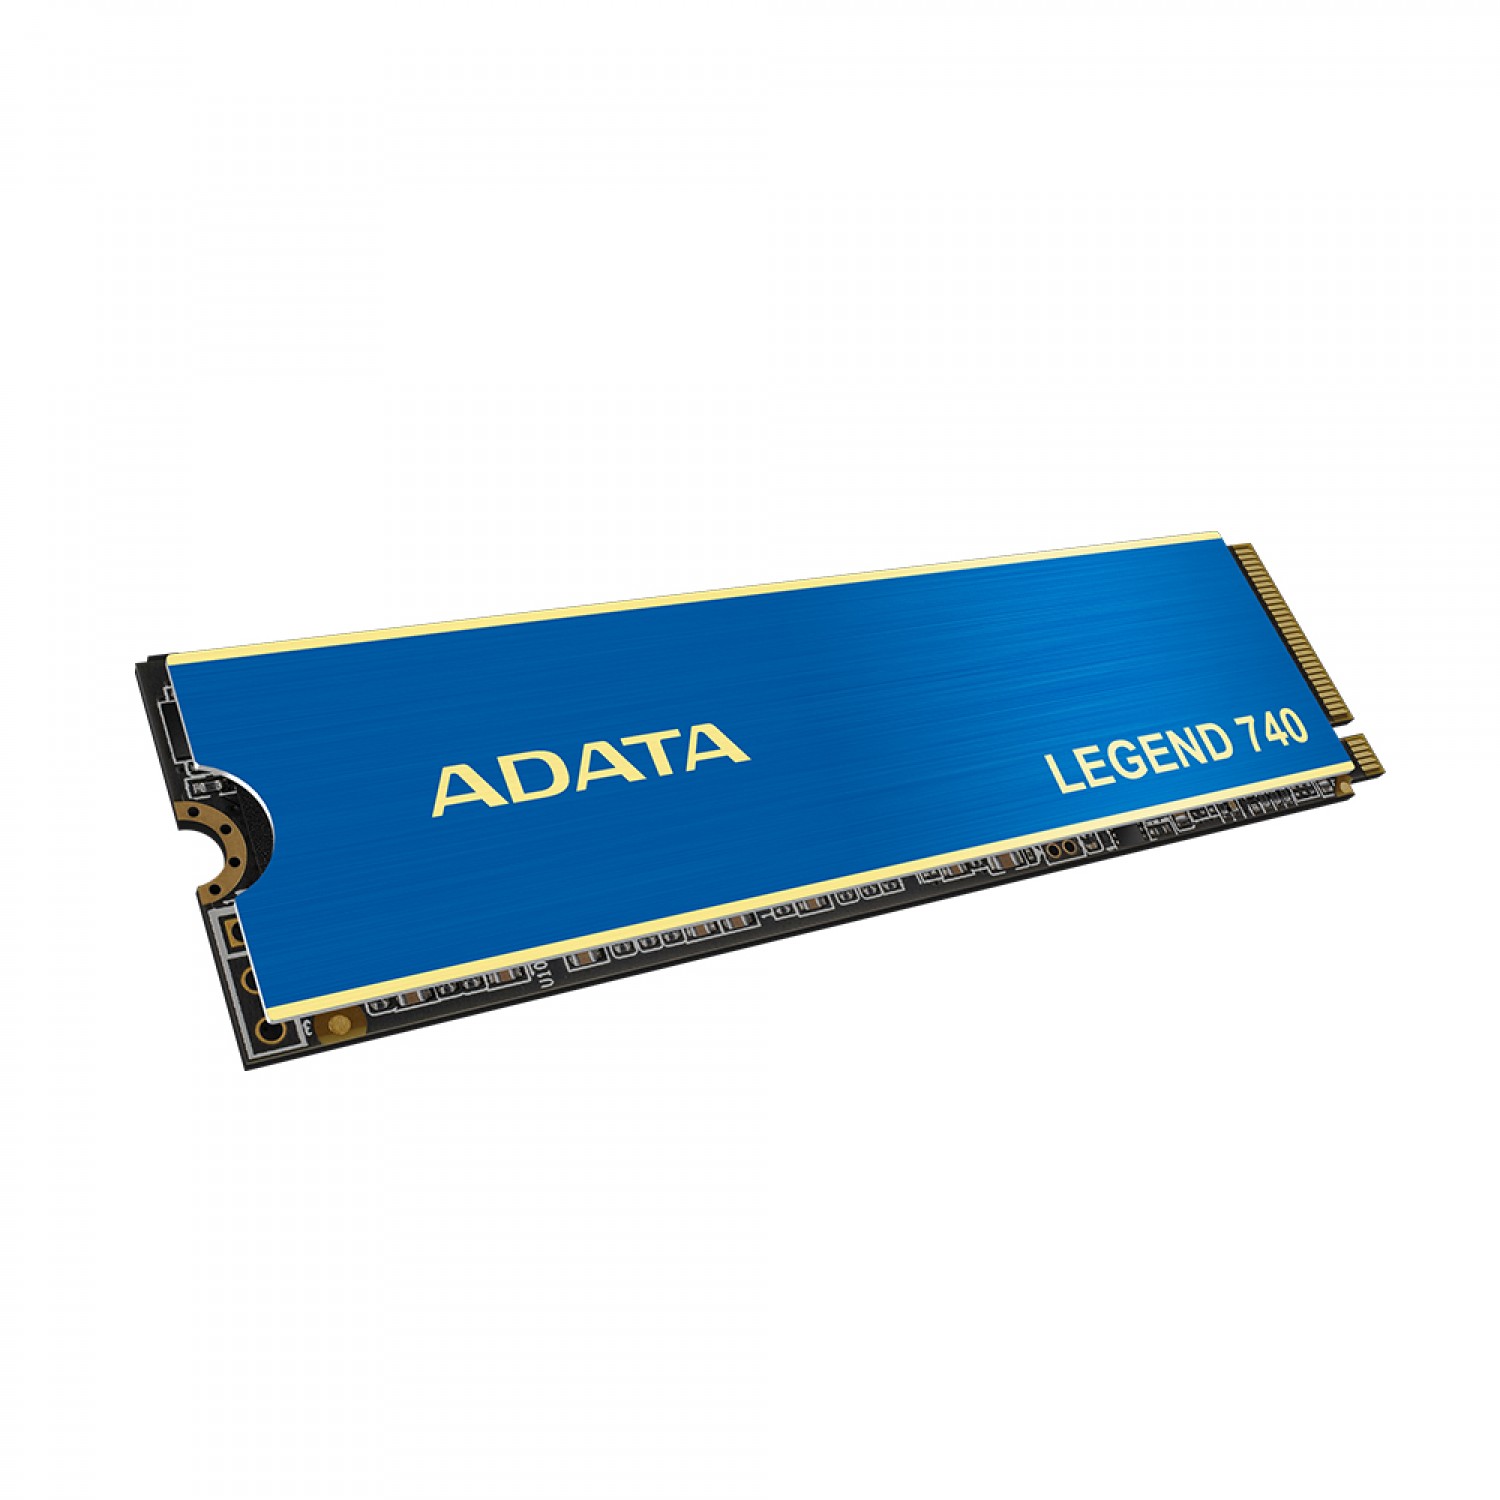 حافظه اس اس دی ADATA Legend 740 500GB-3